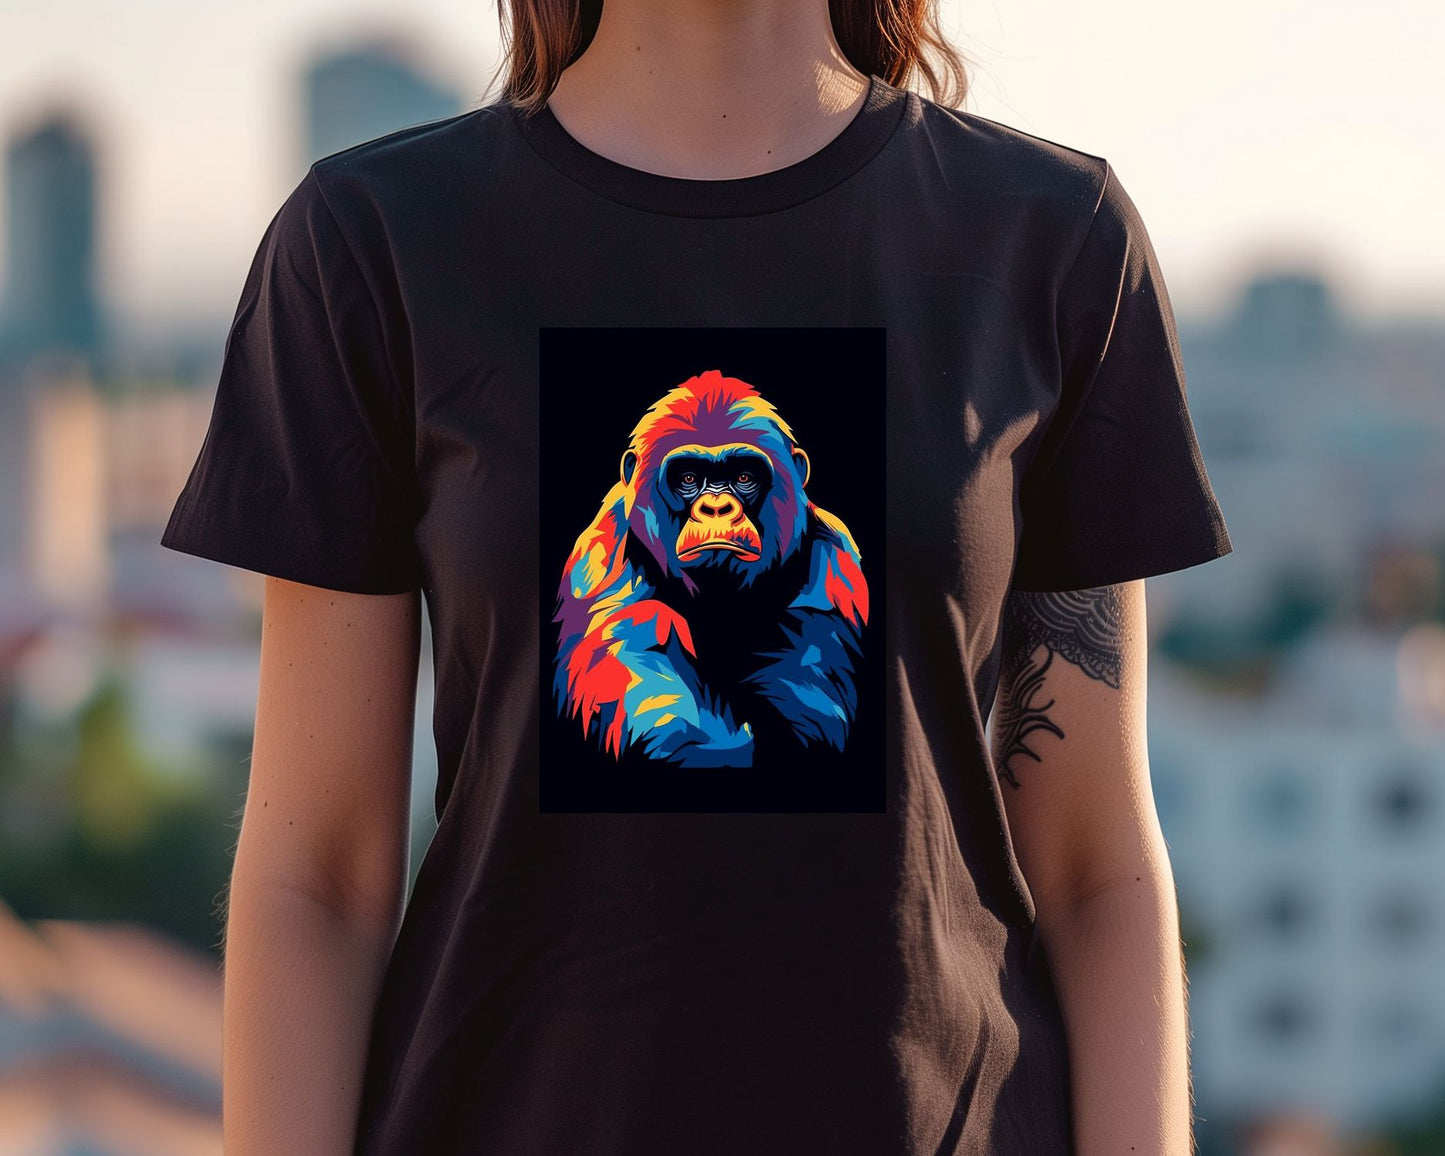 Monkey Gorilla WPAP - @GreyArt